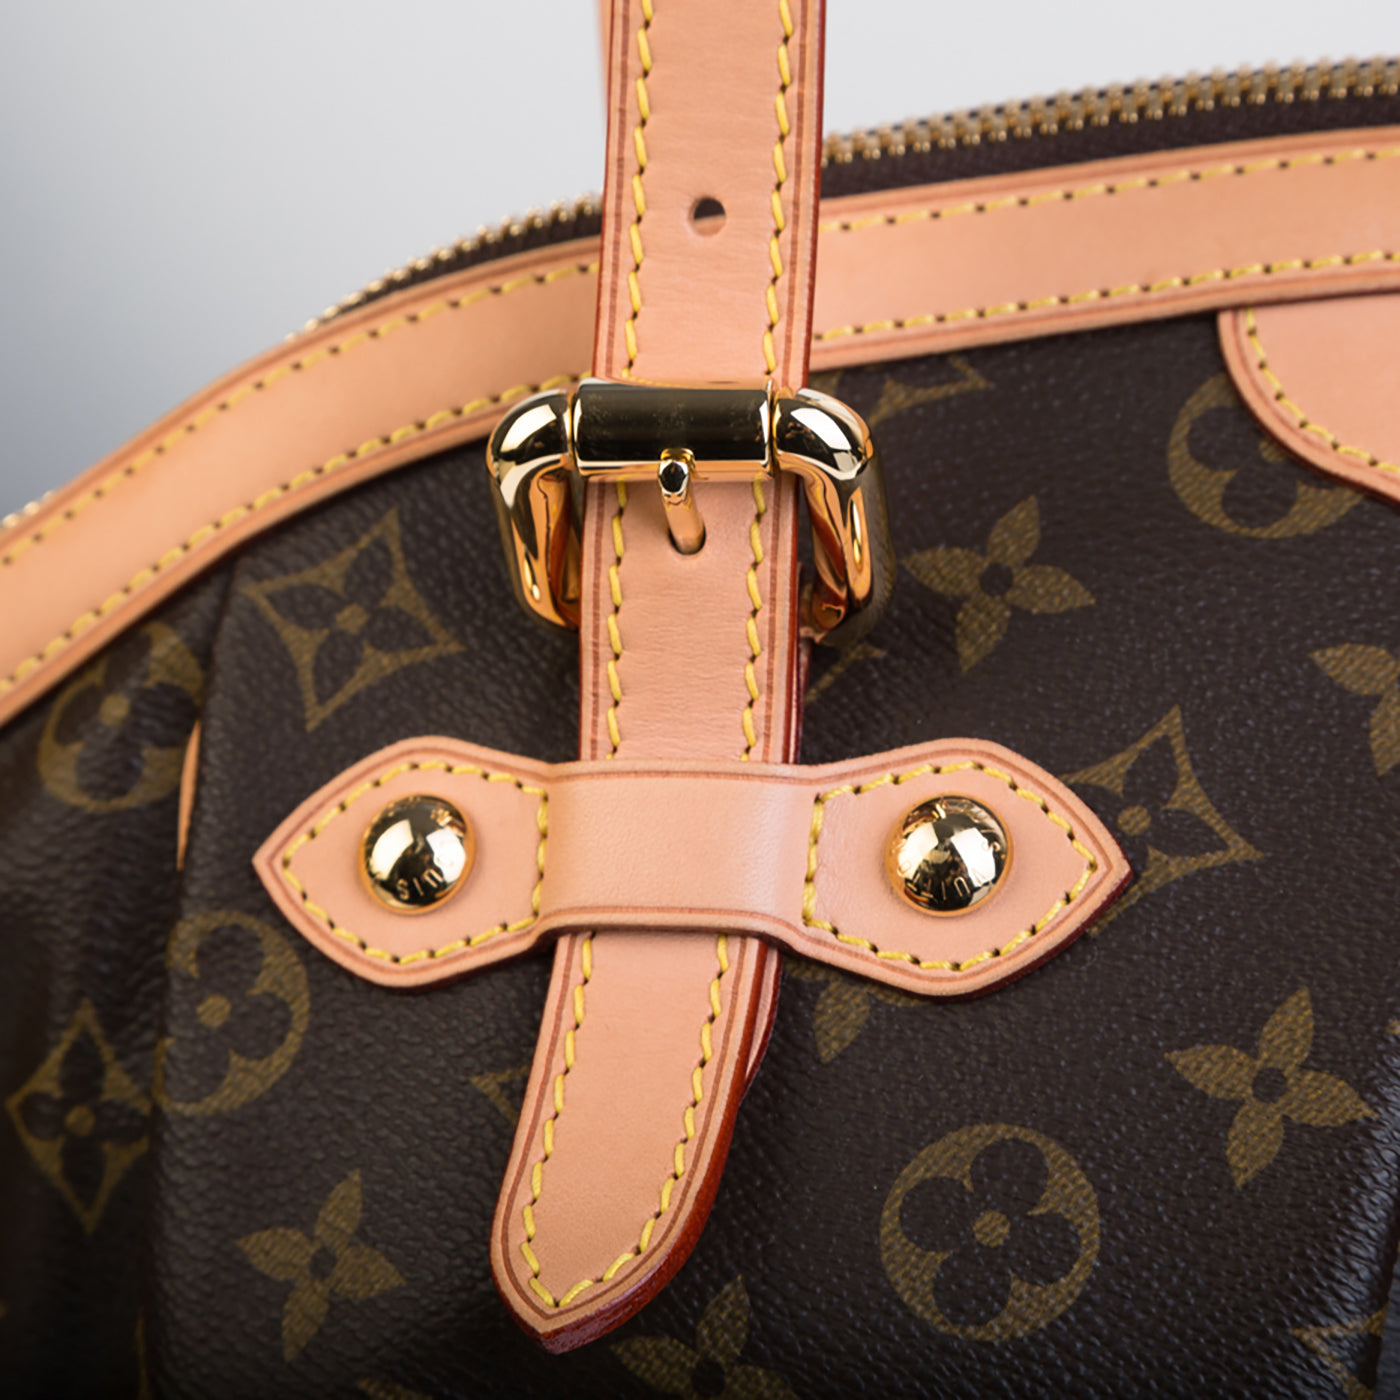 Louis Vuitton Brown Monogram Tivoli GM Bag – The Closet